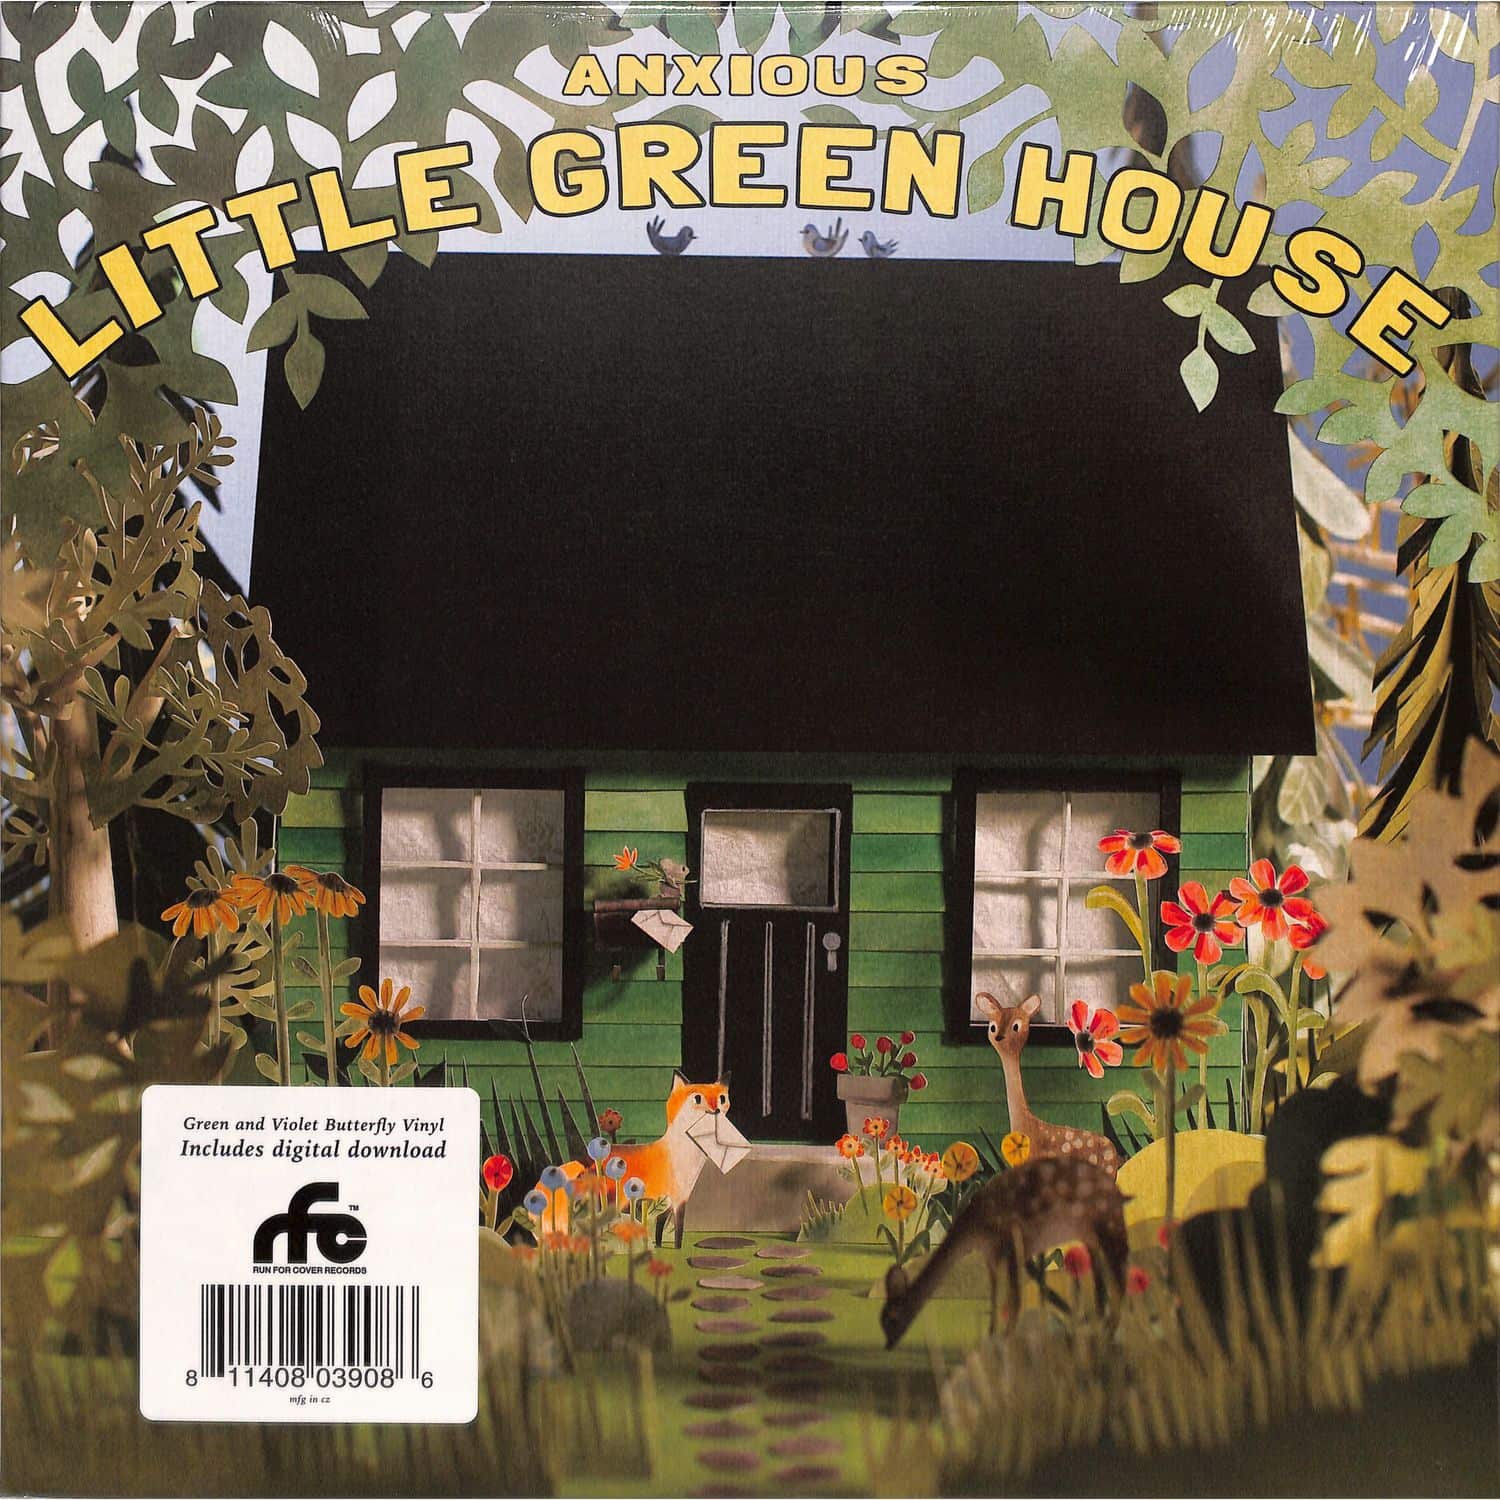 Anxious - LITTLE GREEN HOUSE 